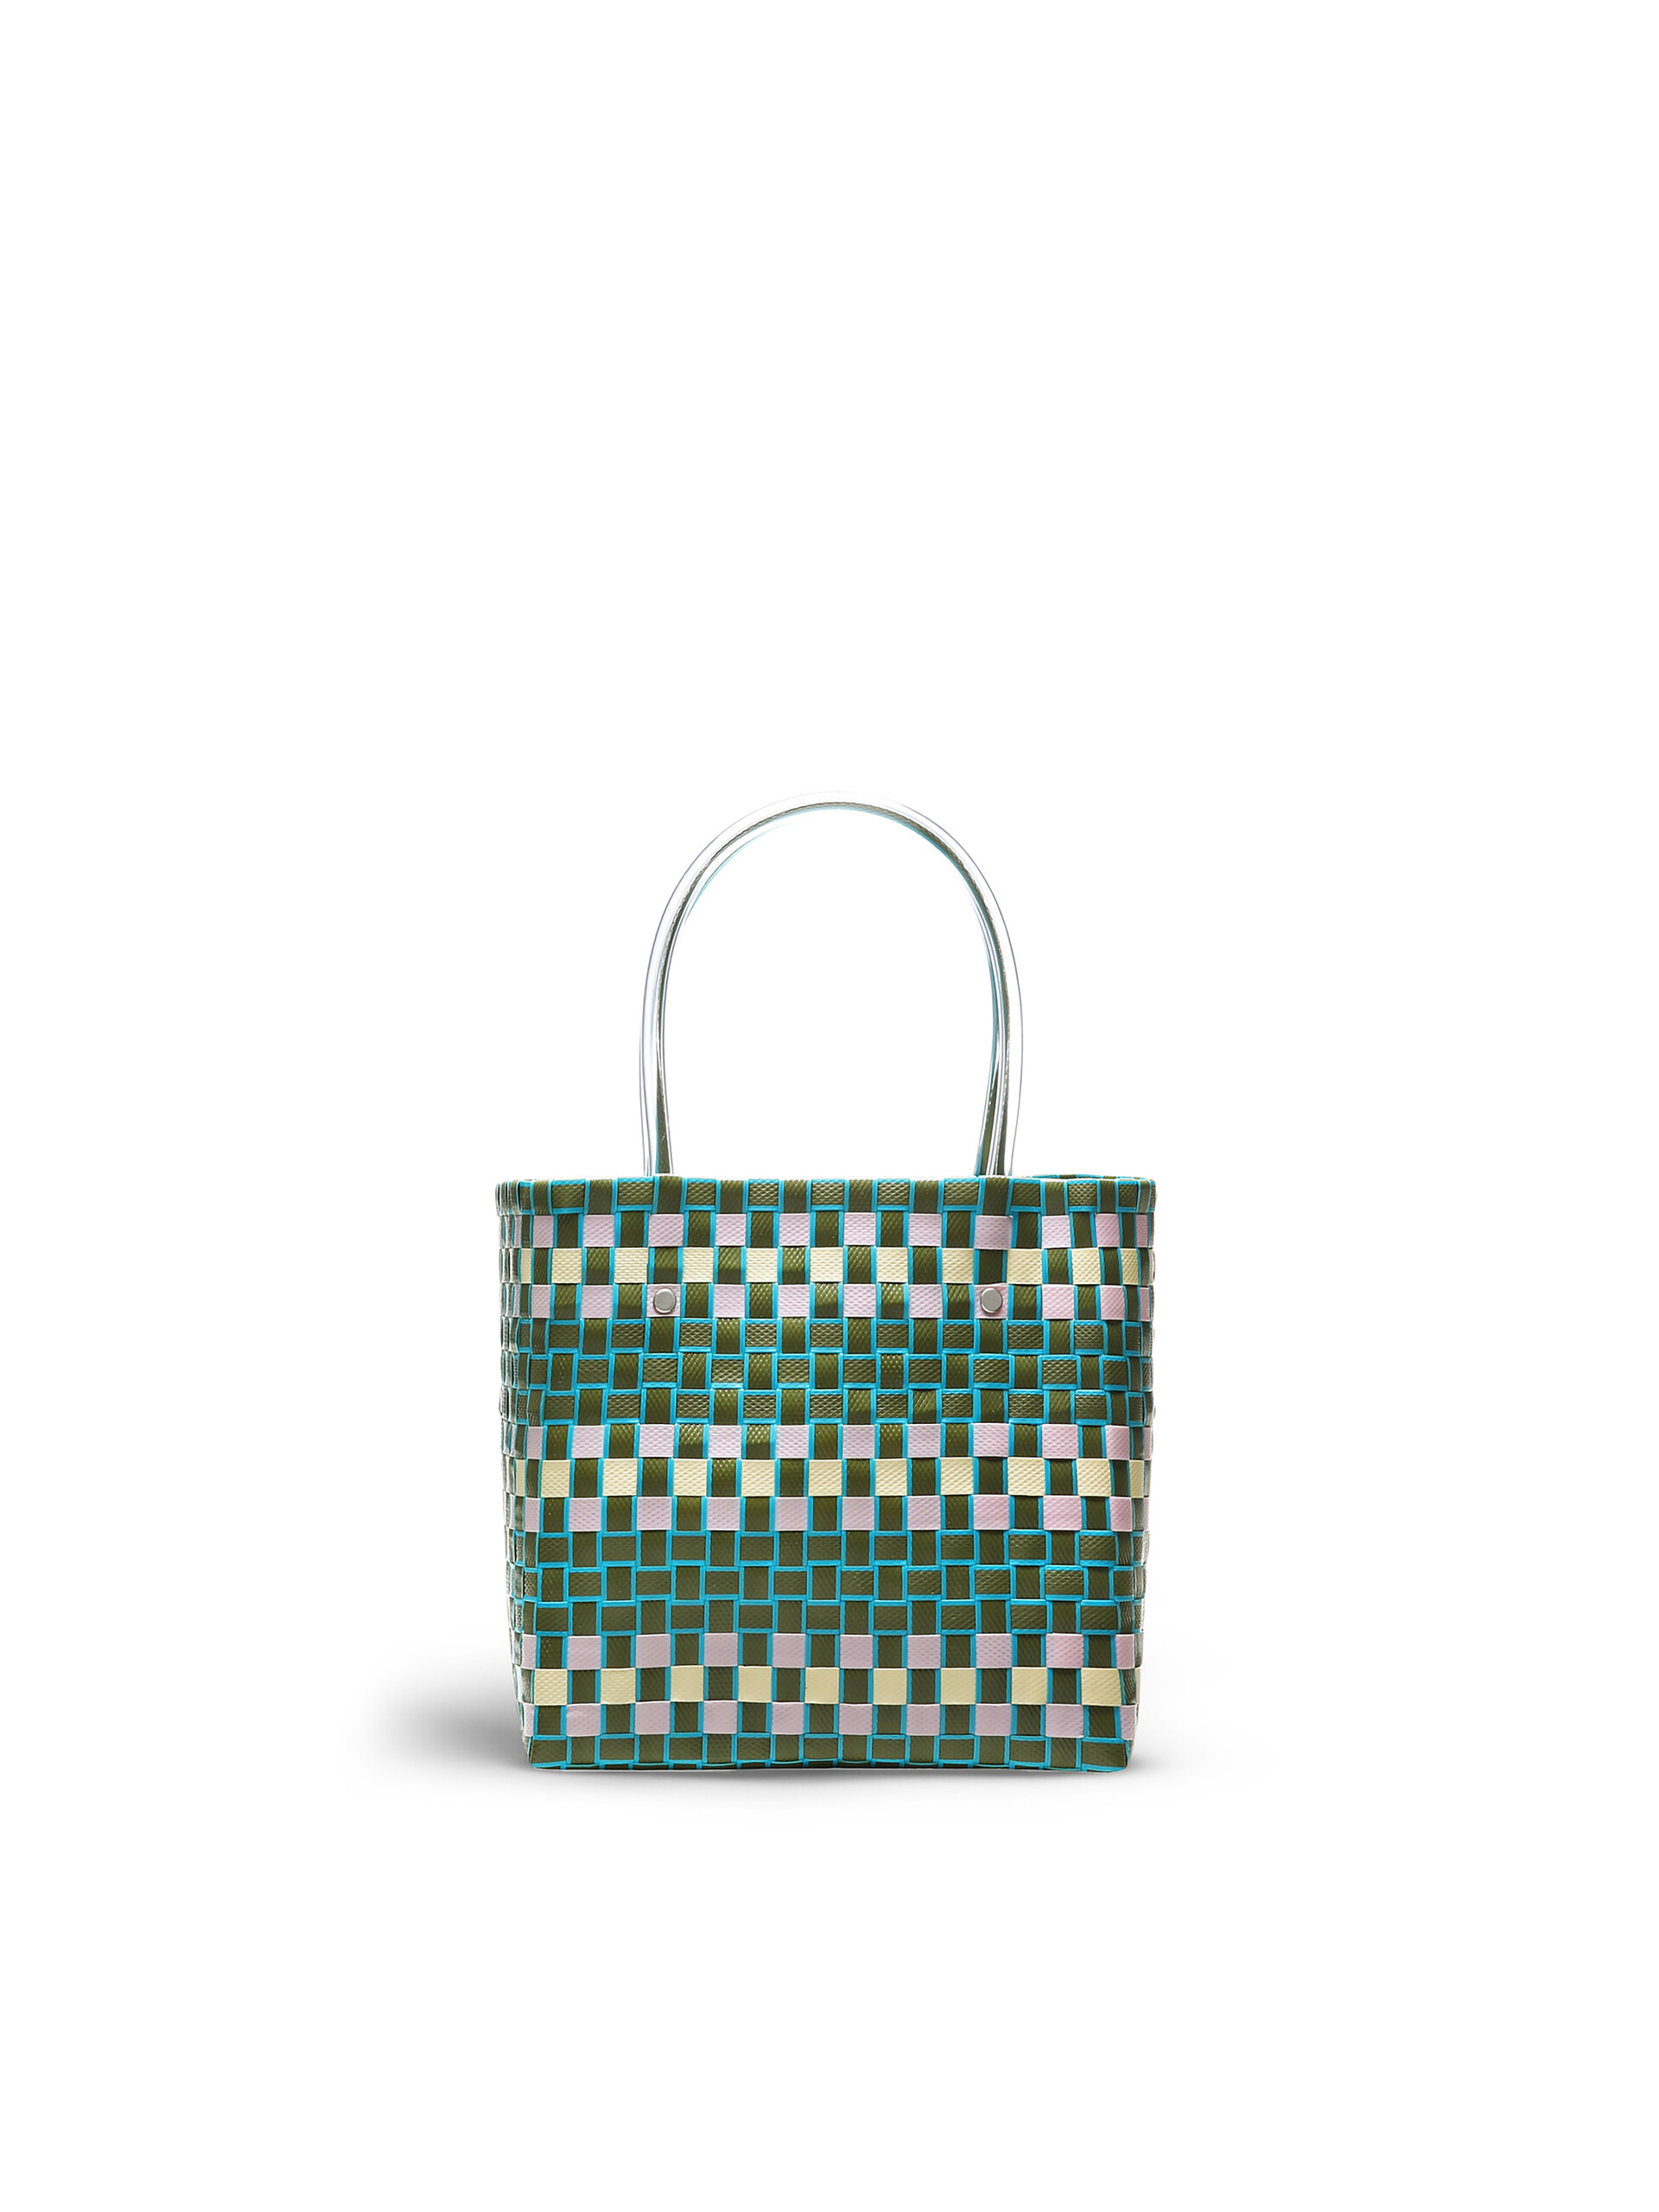 MARNI MARKET shopping bag in green polypropylene - Bags - Image 3